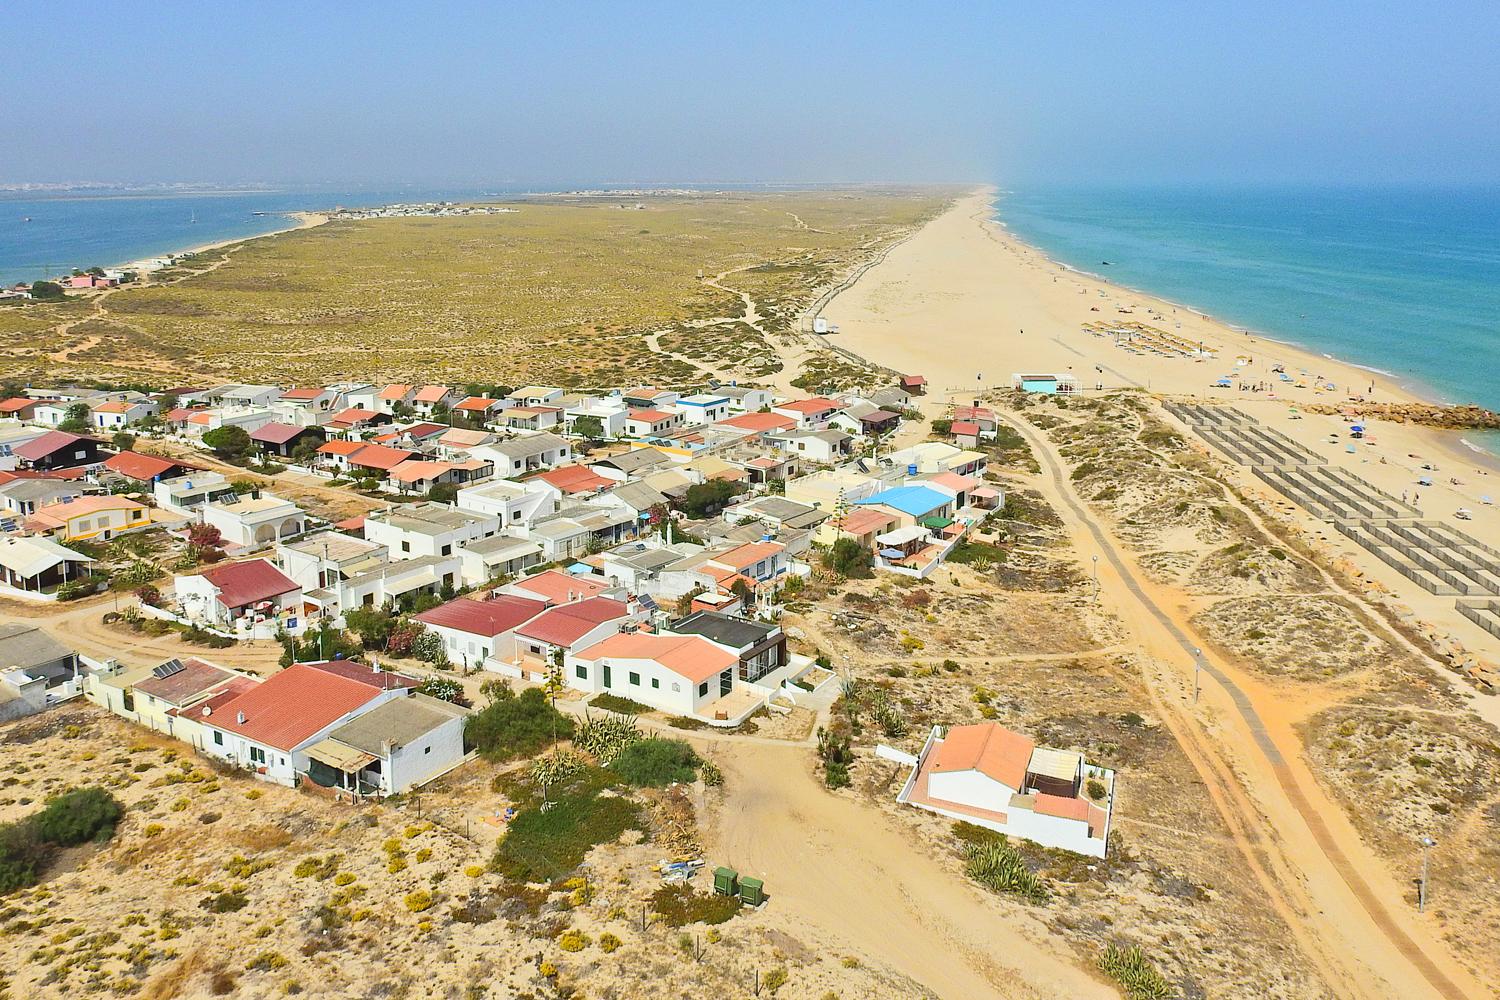 19. Ilha do Farol Algarve - Portugal